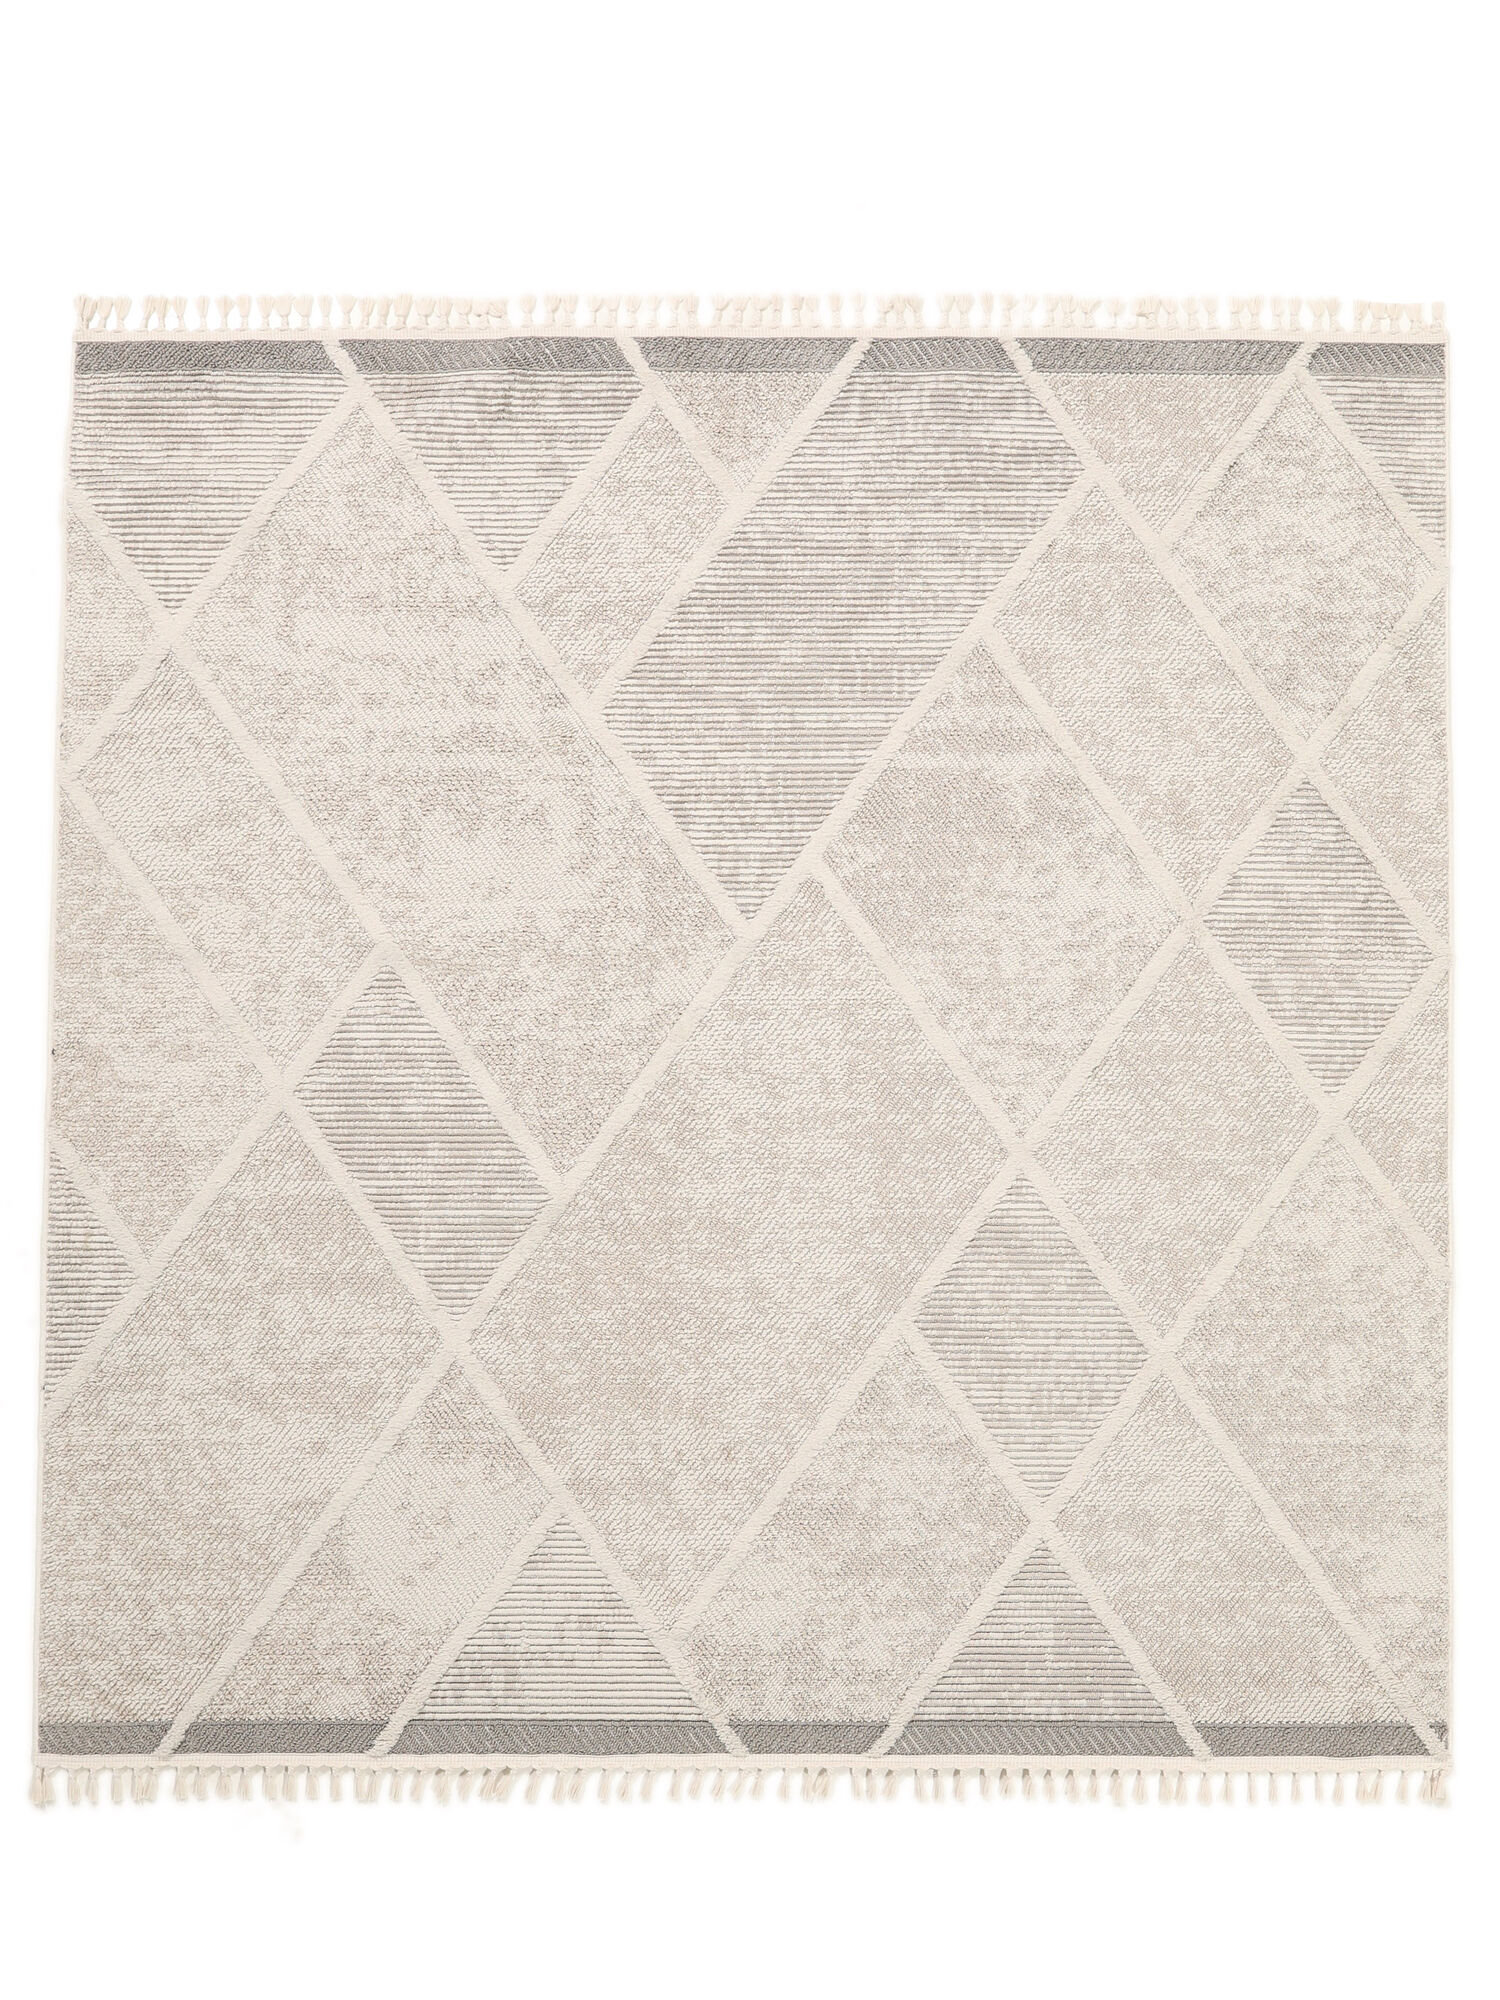 Vivace Handcarved D tapis 300x200 cm gris